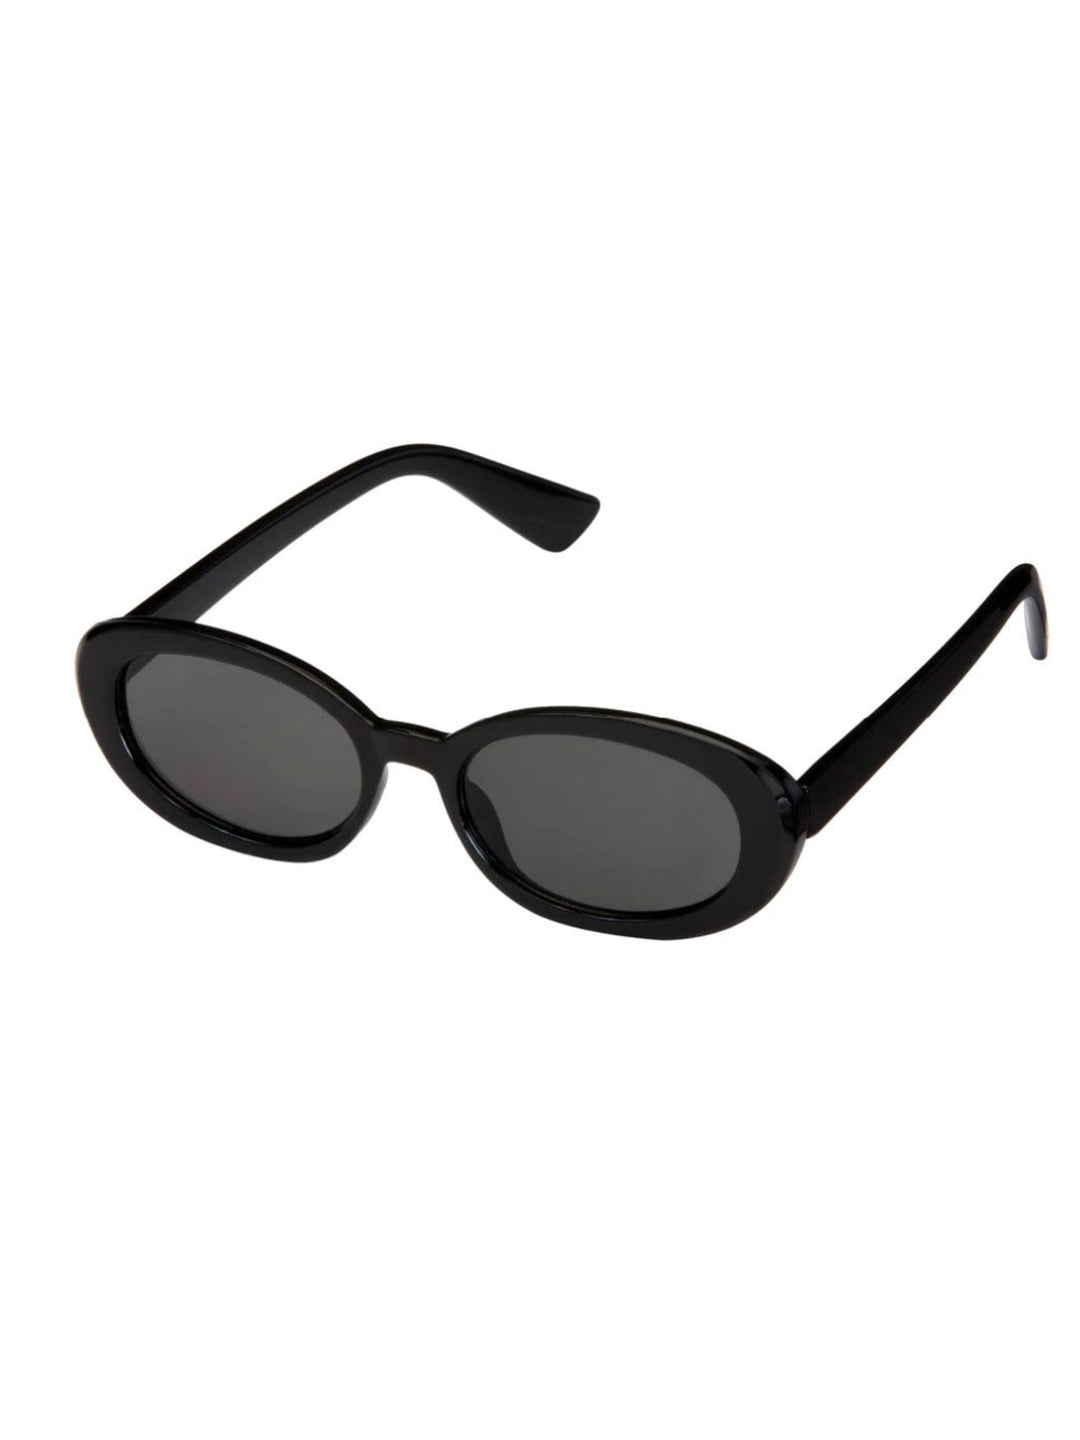 Vintage Collection Sunglasses